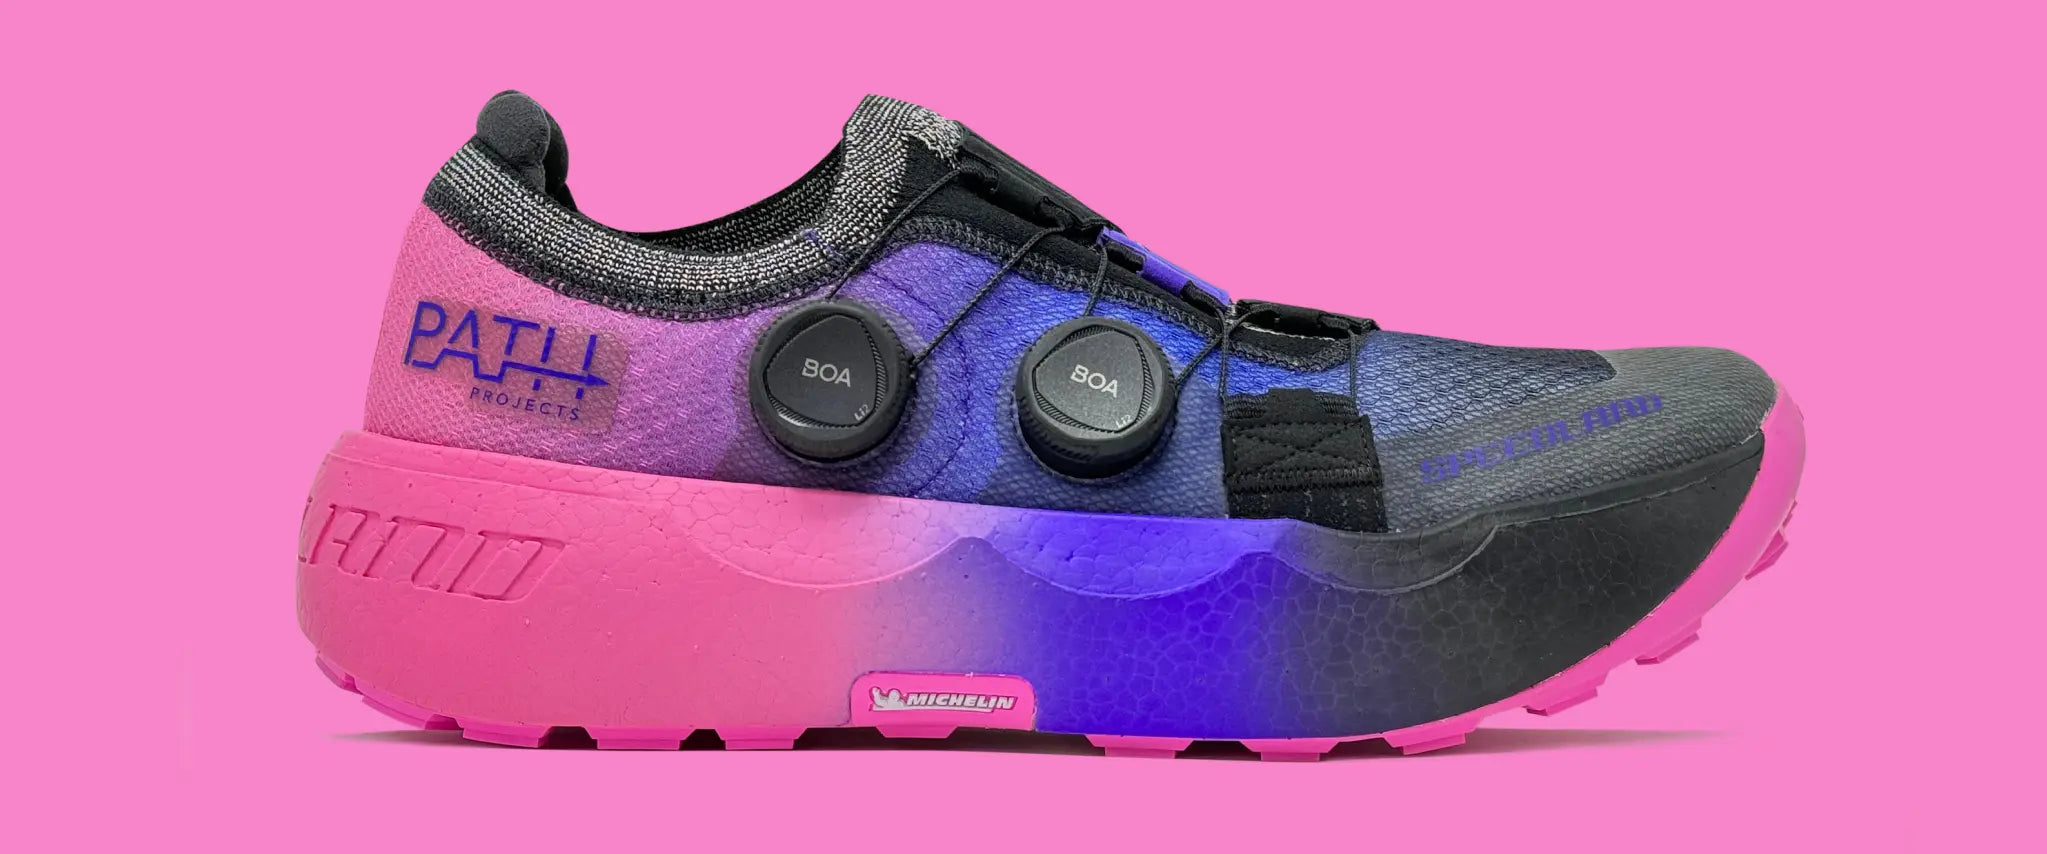 Speedland Creates Blood-Splattered Trail Running Shoes for Pro